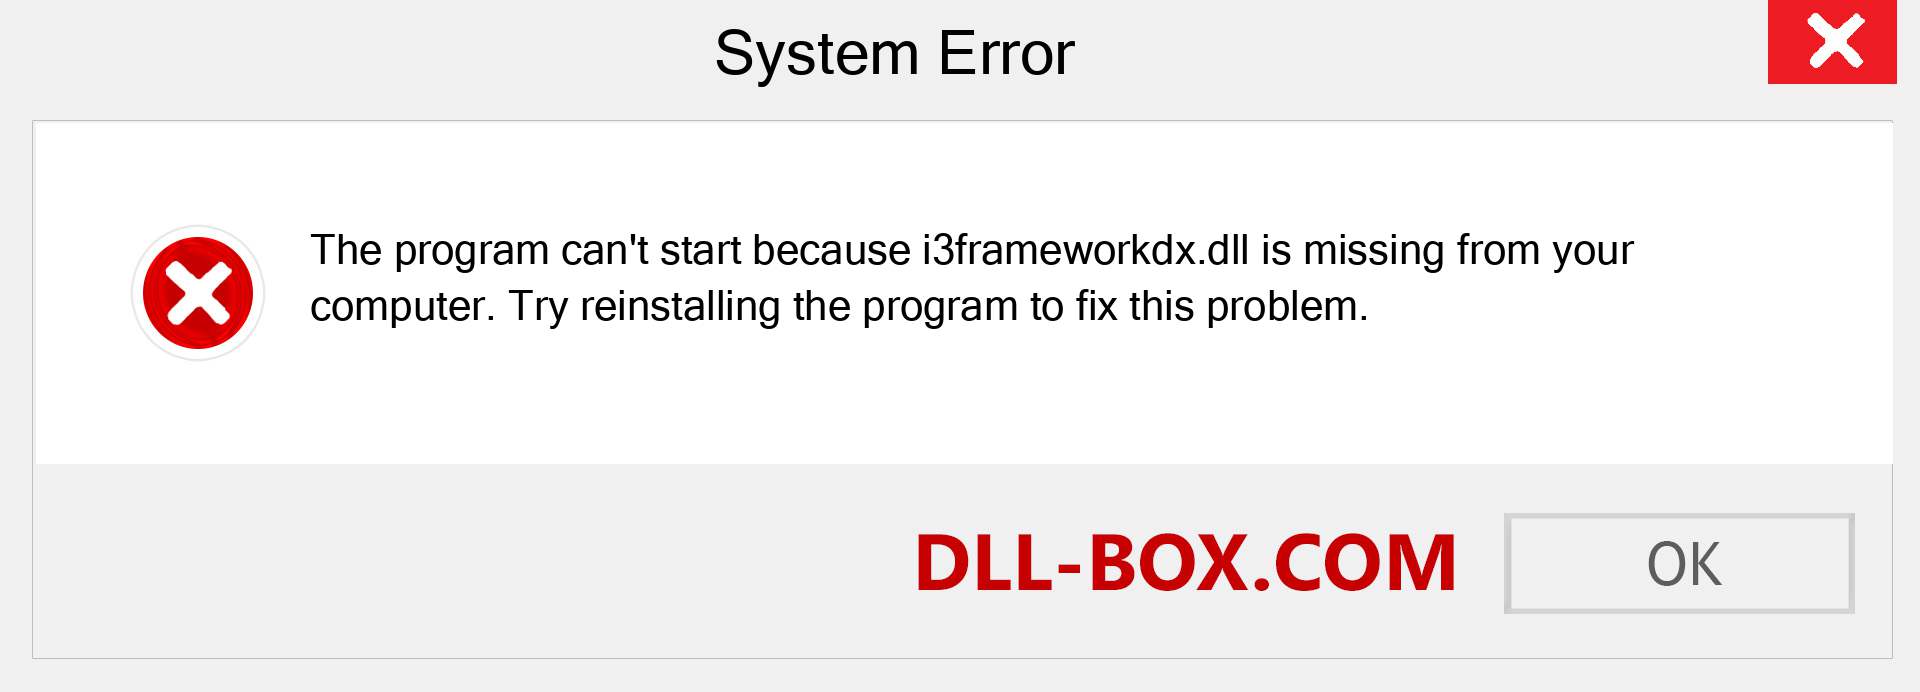  i3frameworkdx.dll file is missing?. Download for Windows 7, 8, 10 - Fix  i3frameworkdx dll Missing Error on Windows, photos, images